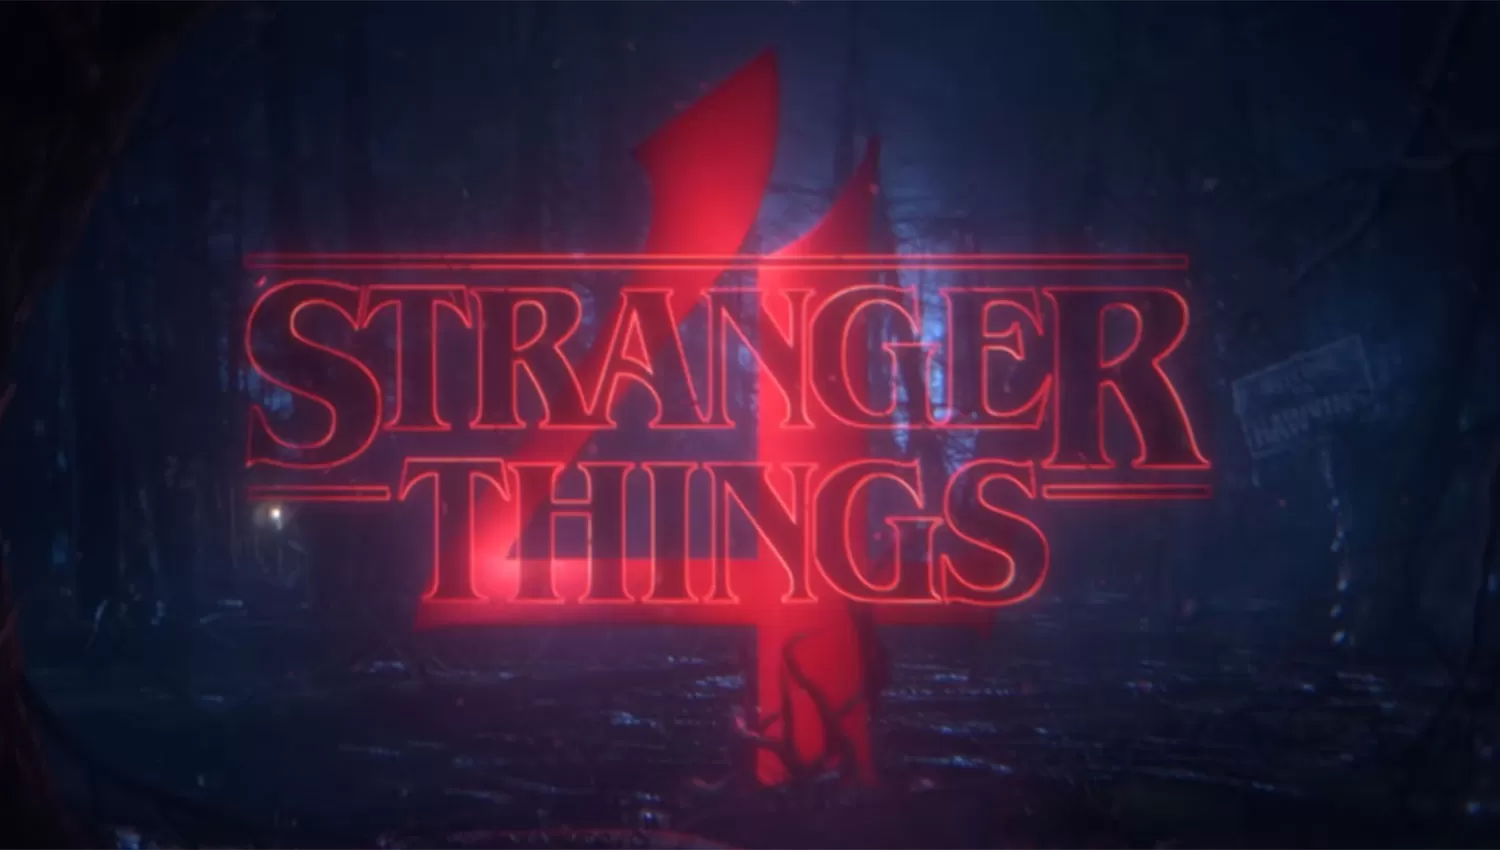 Stranger Things tendrá una cuarta temporada. 